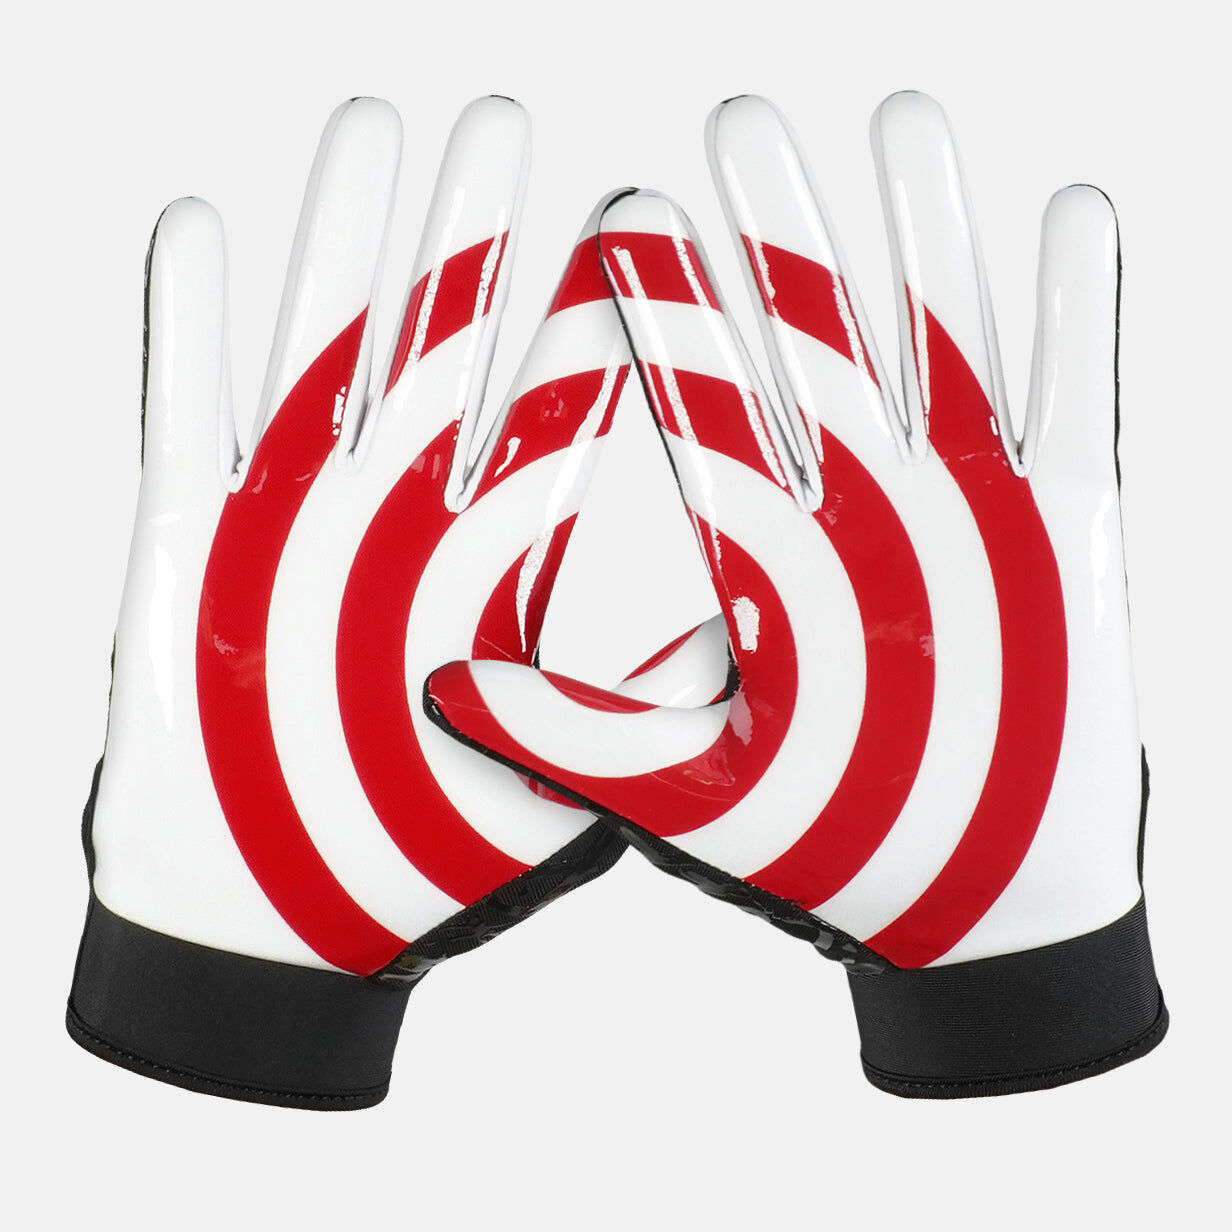 Sleefs Target Sticky Football Receiver Gloves